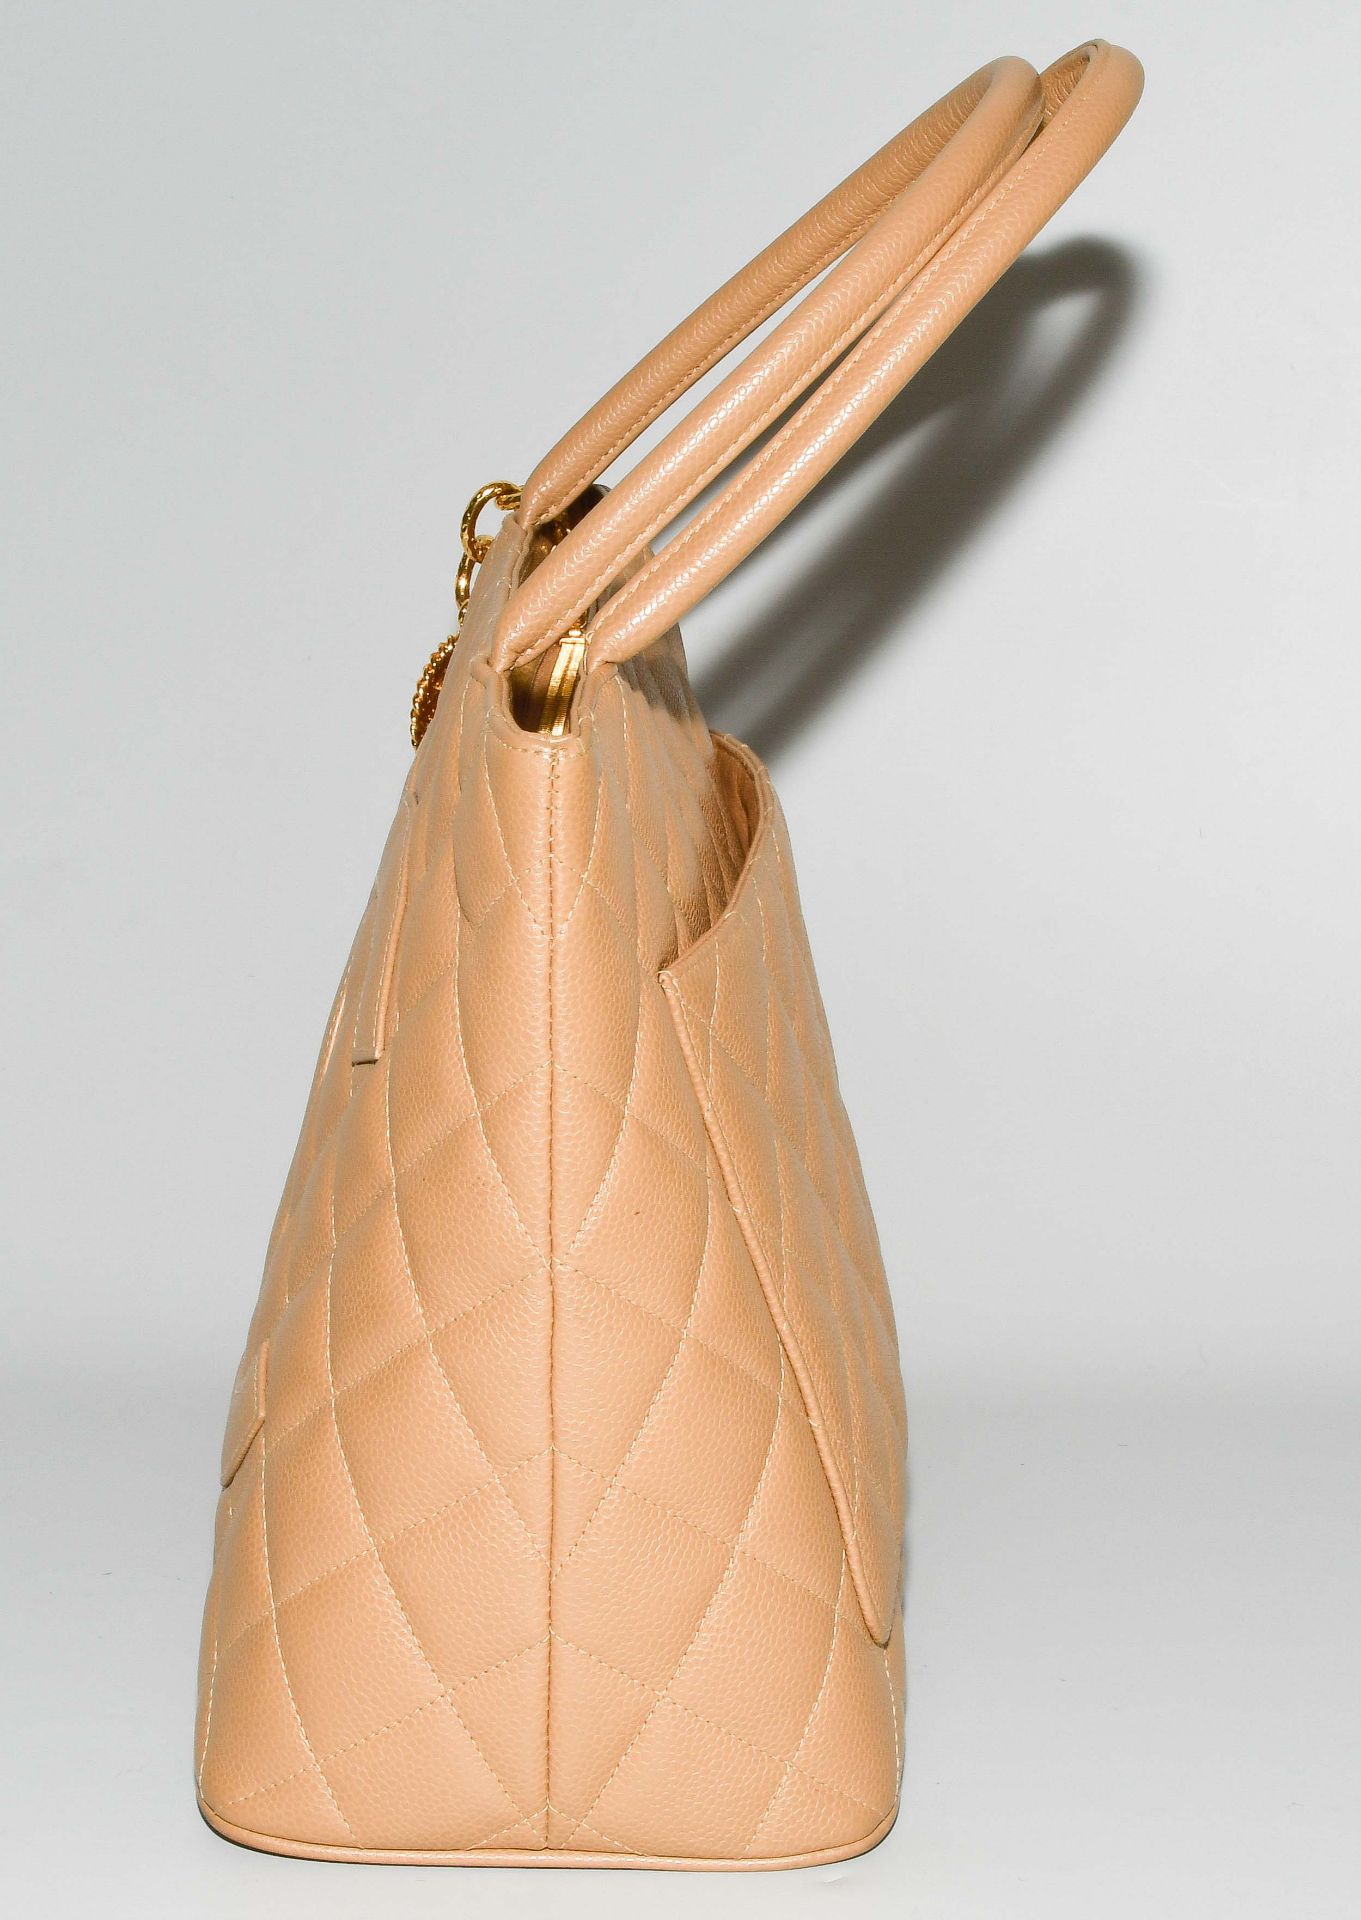 Chanel, Handtasche "Medaillon" - Image 3 of 10